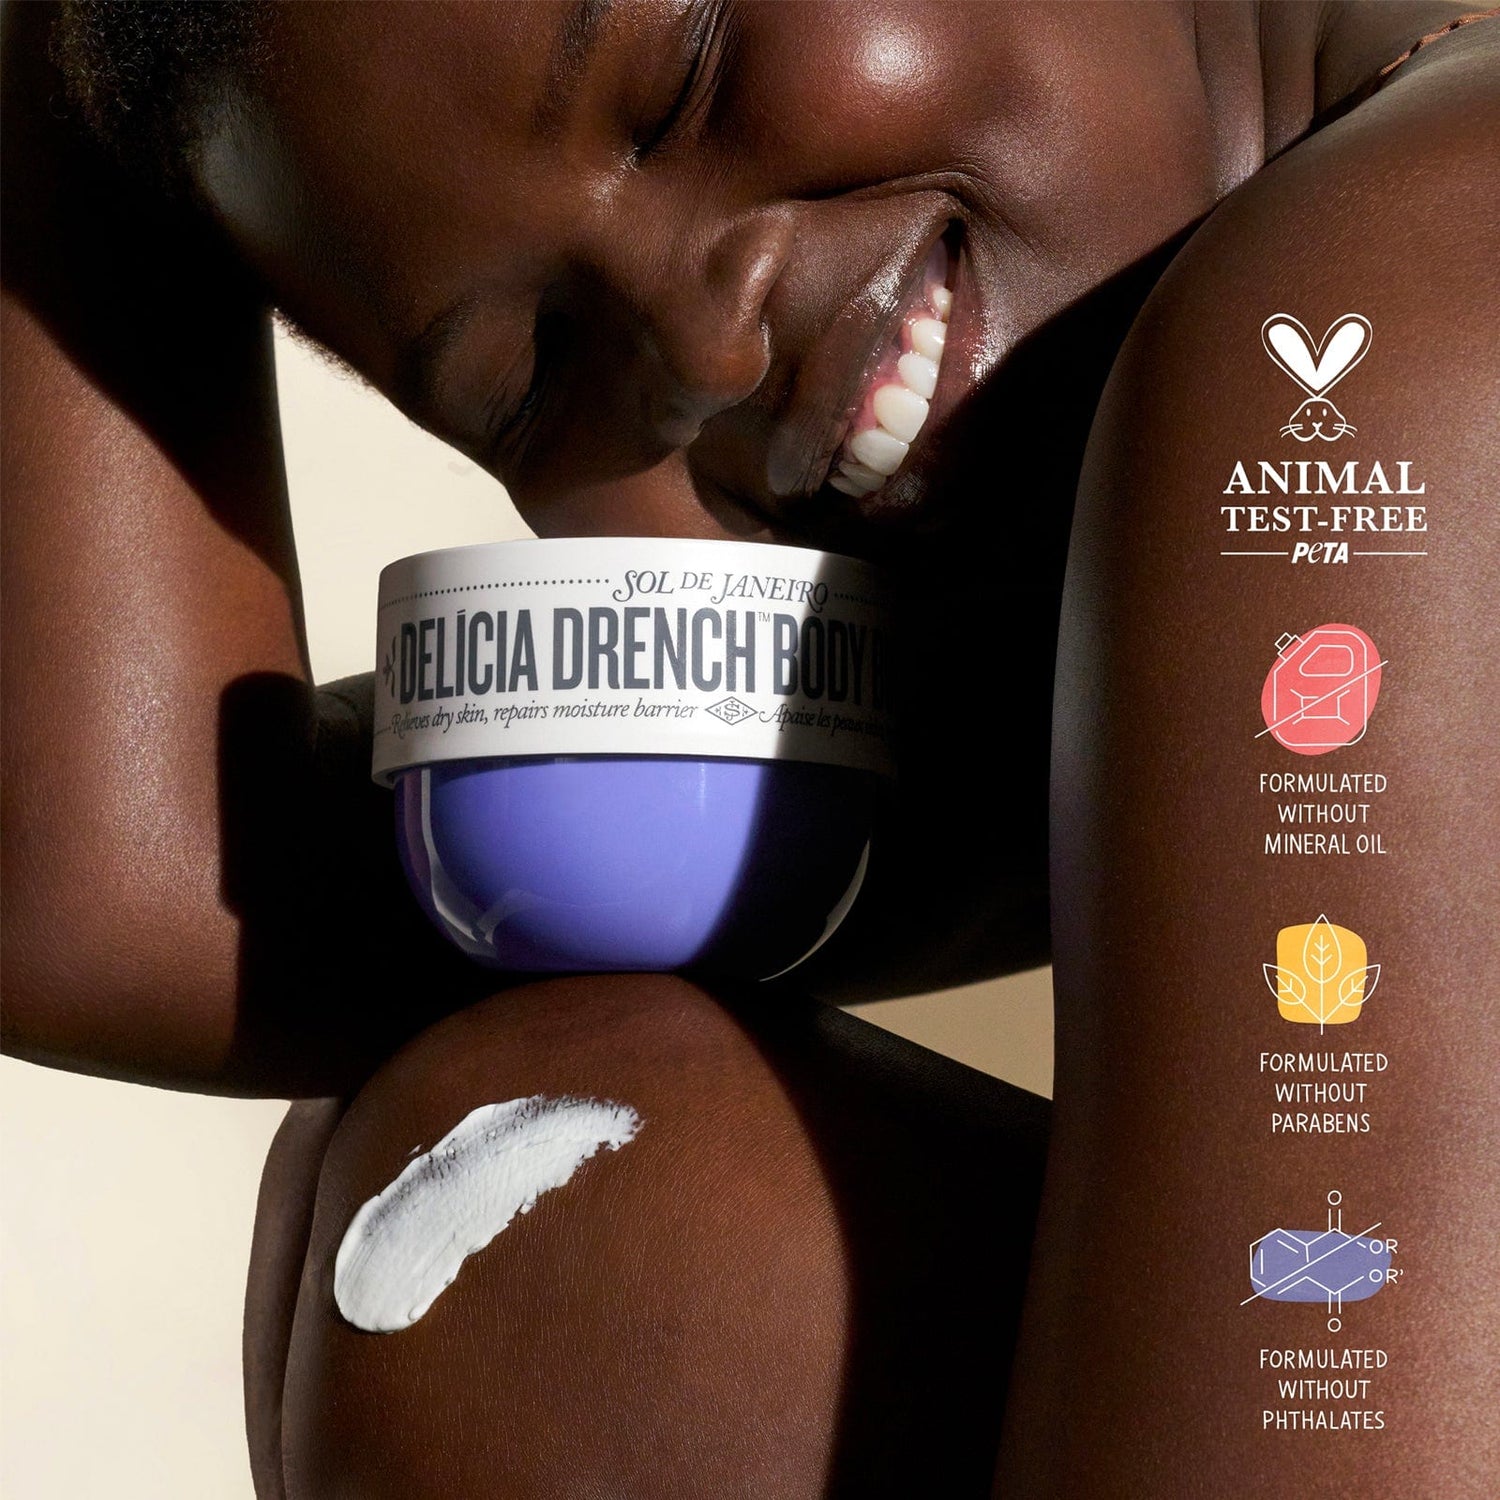  animal test-free peta vegan | formulated without mineral oil |  formulated without parabens | formulated without Phthalates